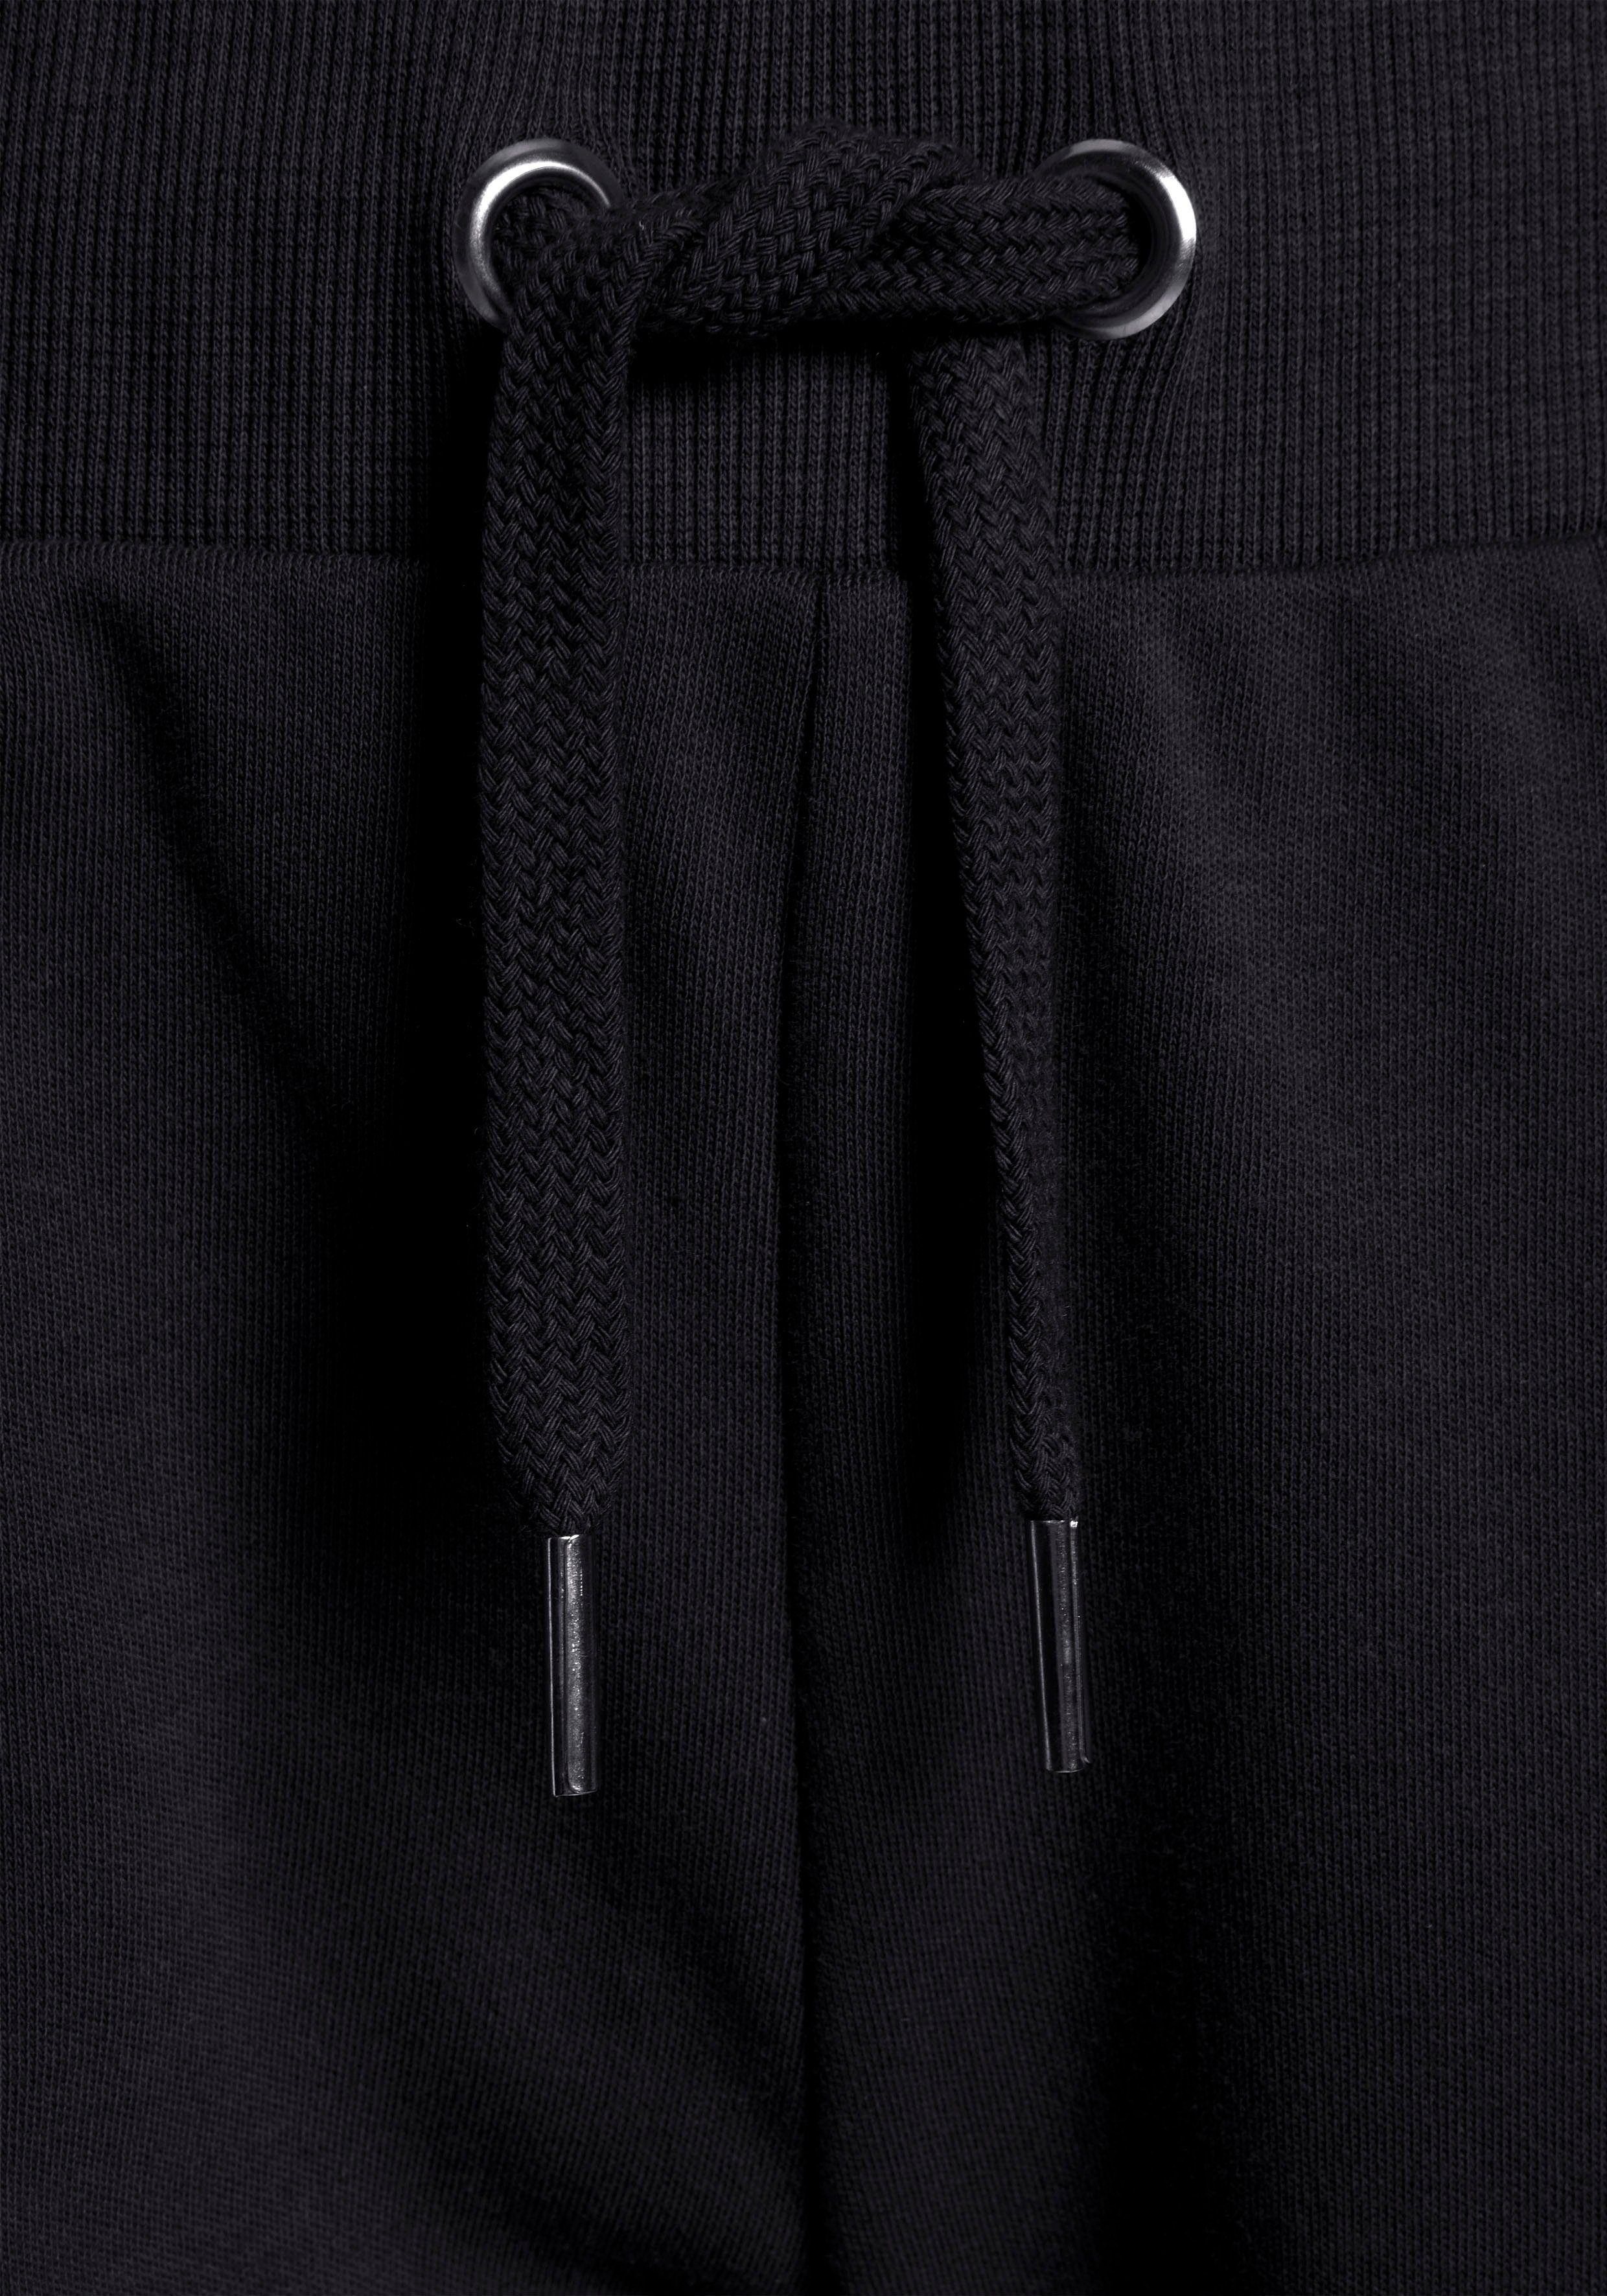 Relaxhose Loungeanzug glänzender mit Logostickerei, Bench. Loungewear schwarz